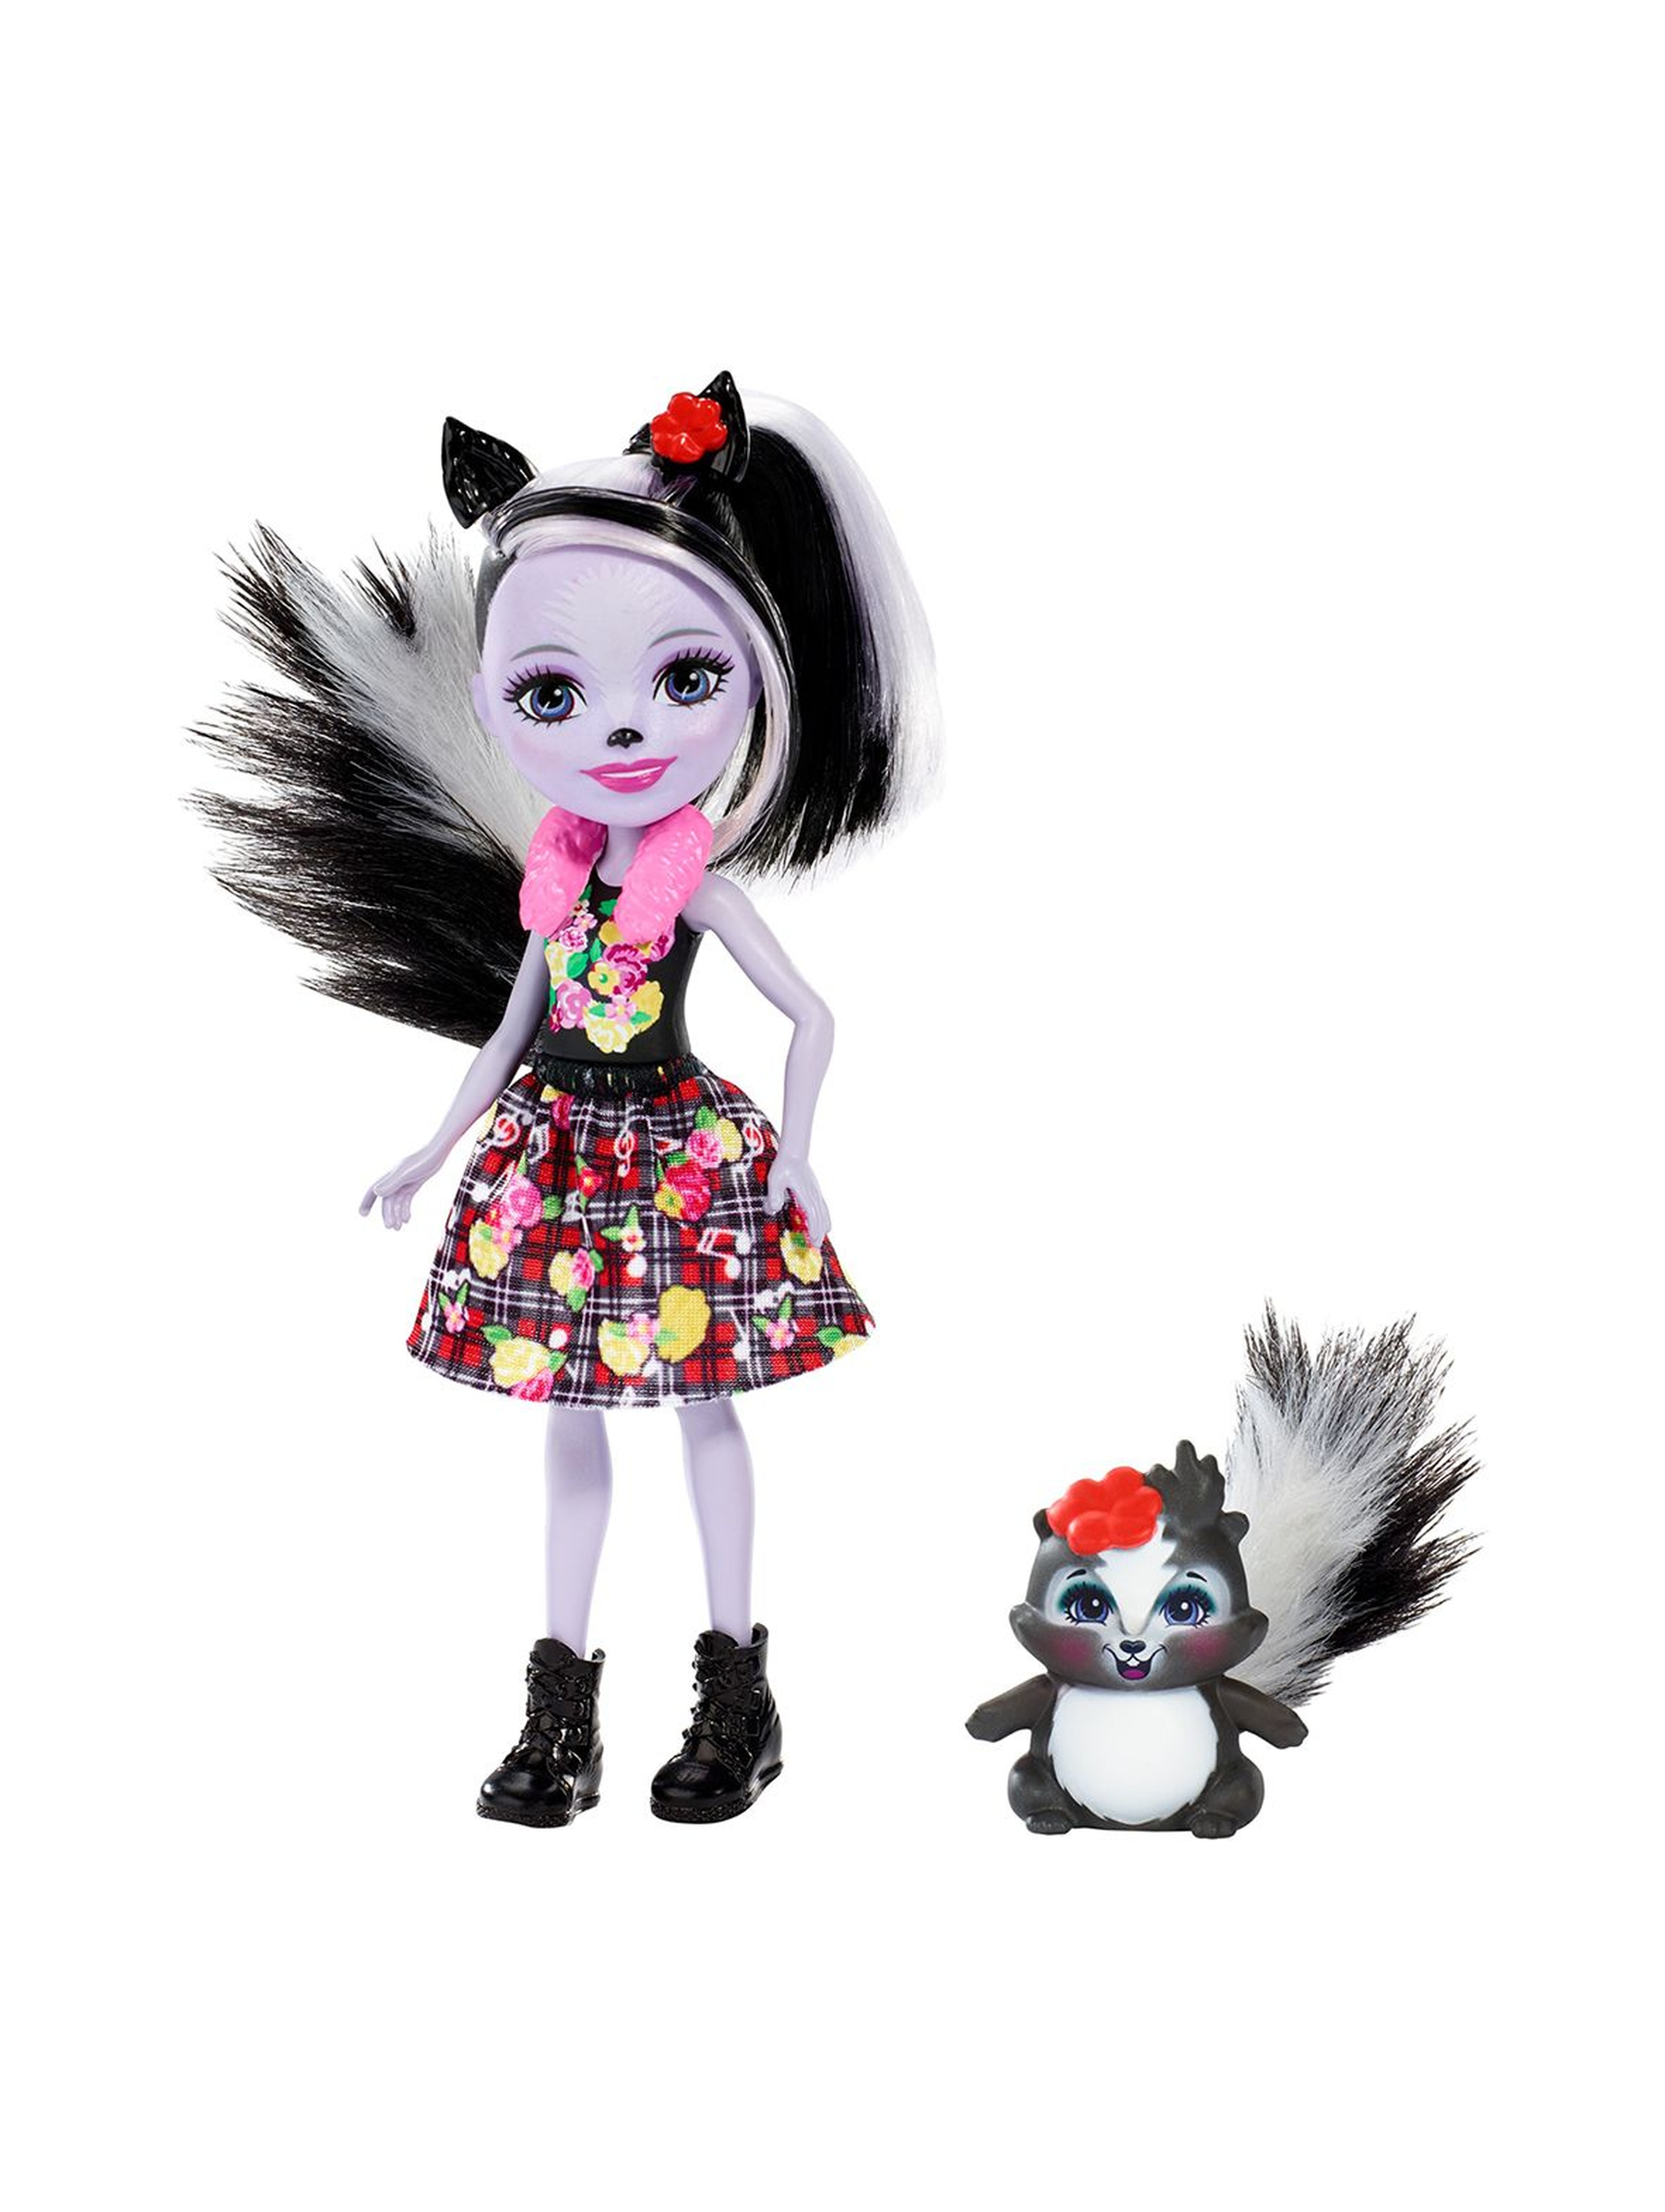 Enchantimals Lalka Sage Skunk + skunks Caper figurka wiek 4+